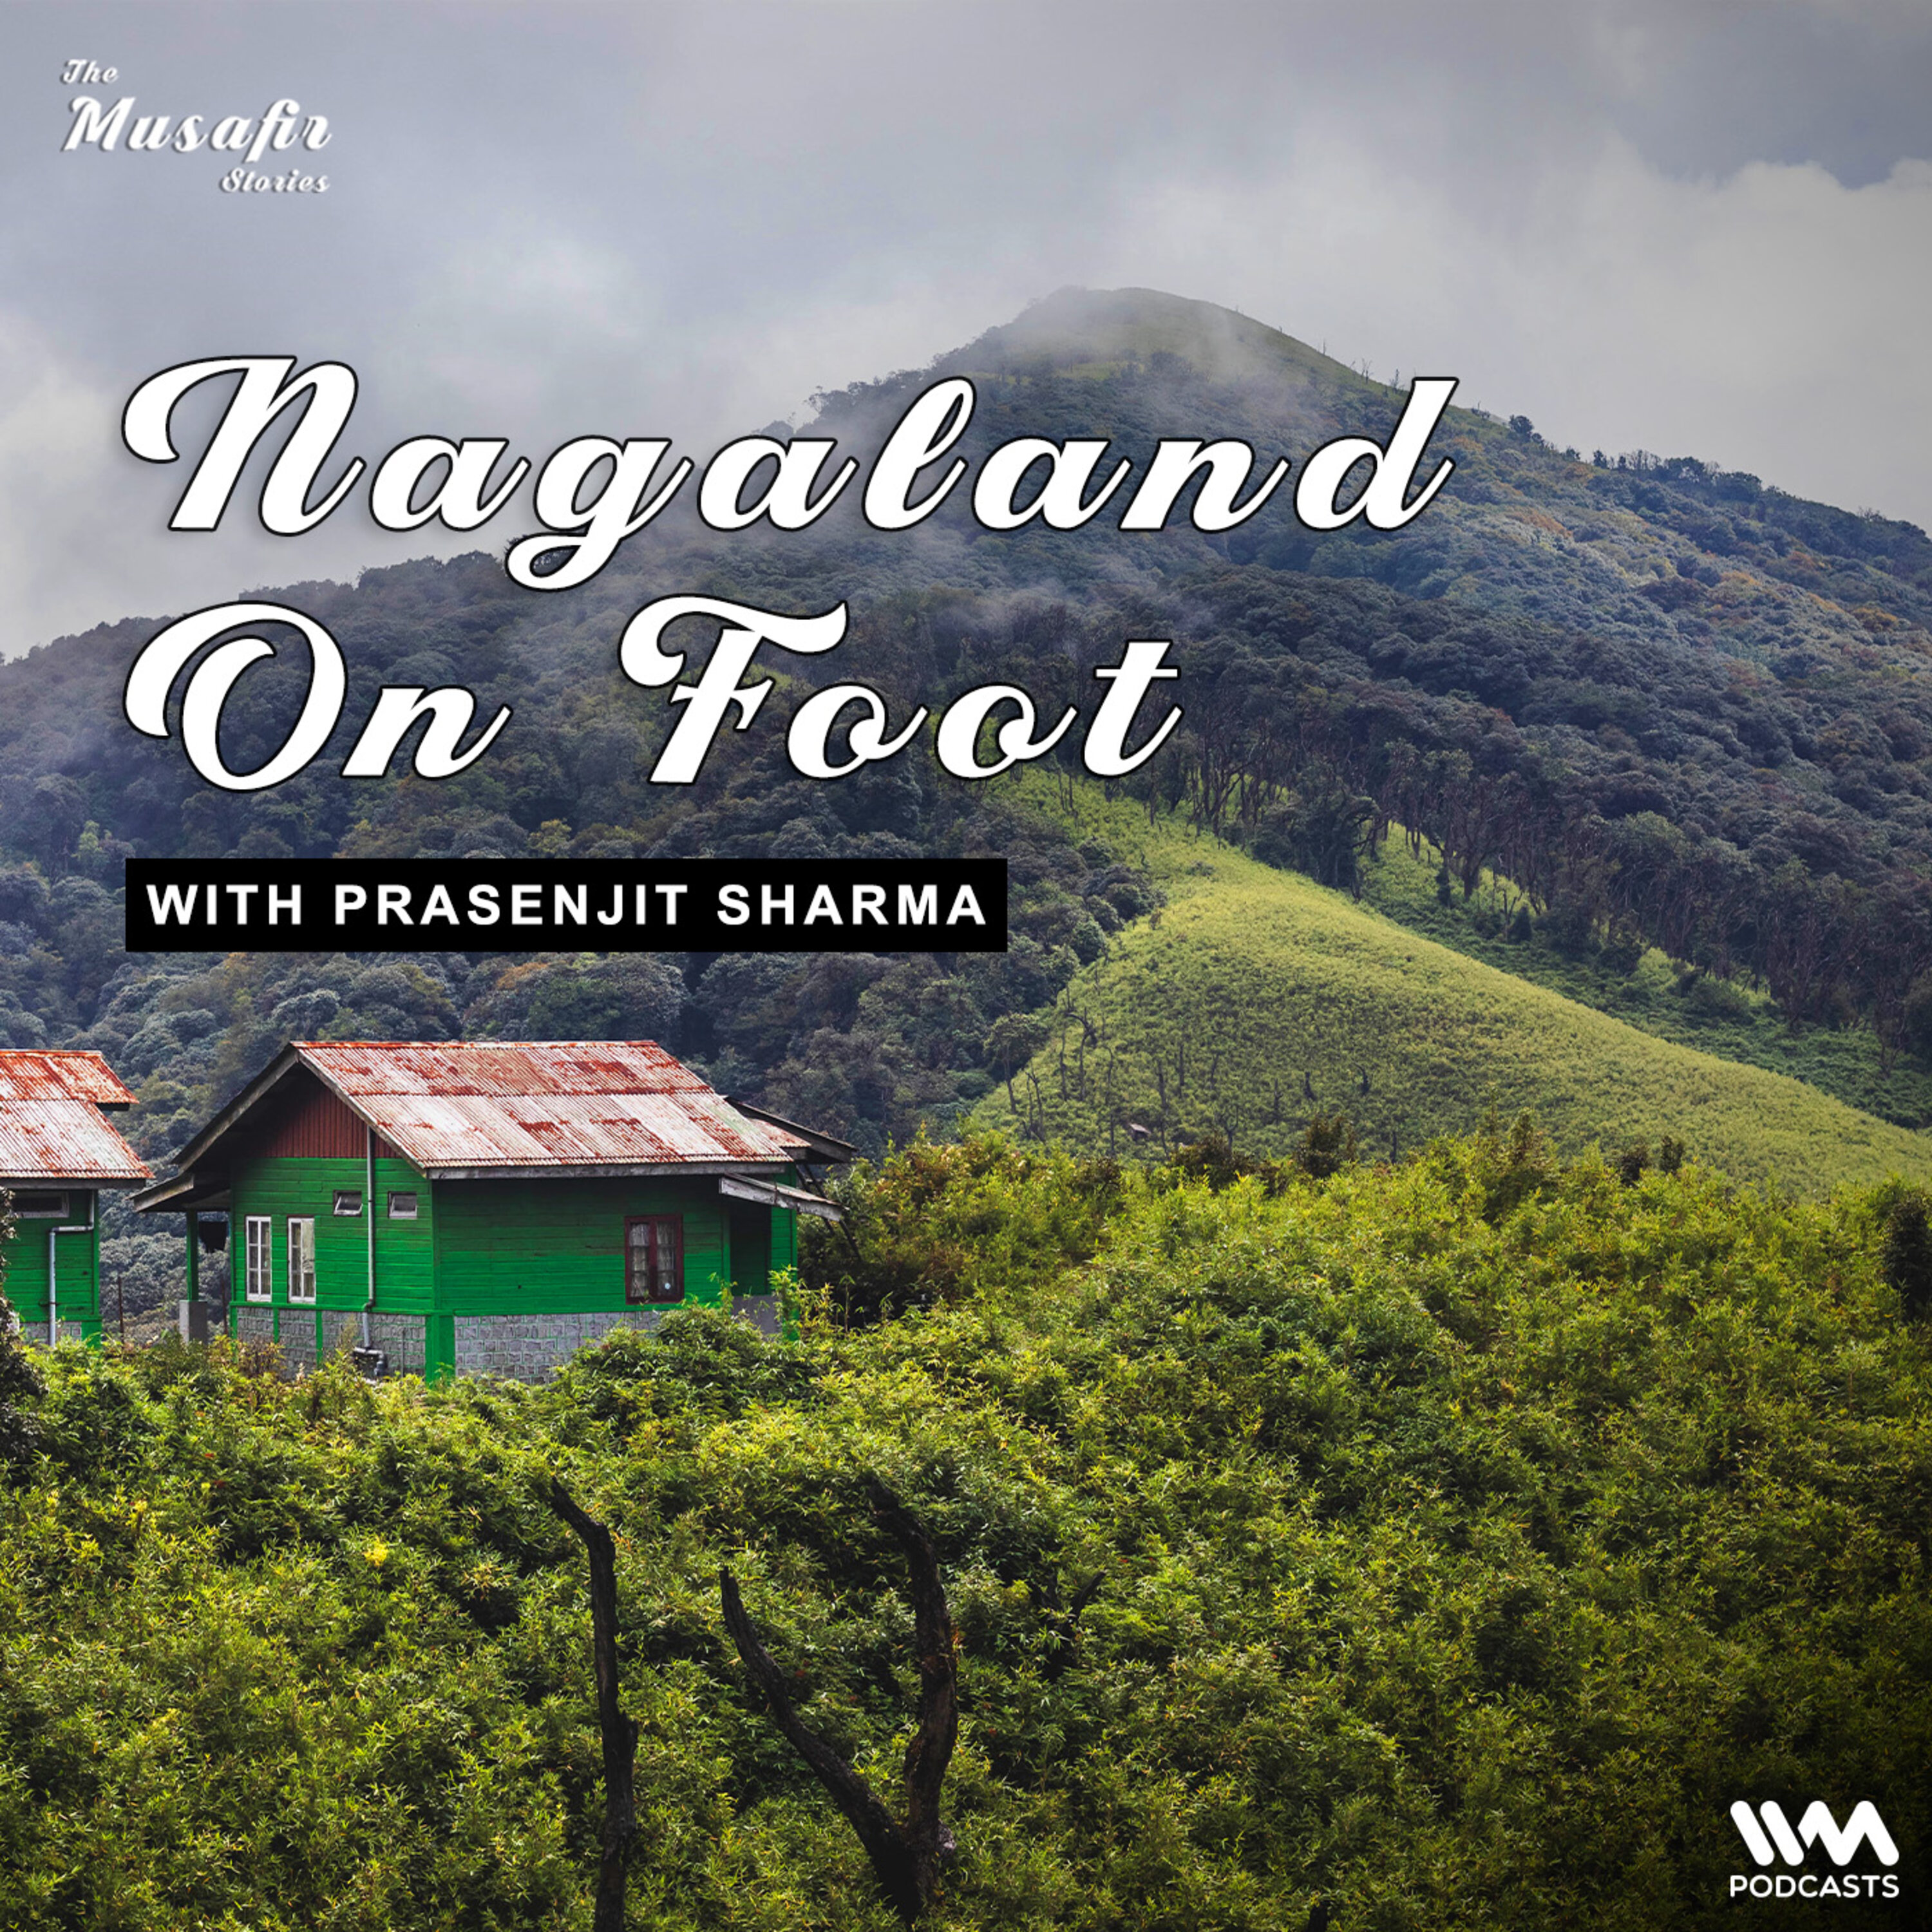 Nagaland on foot with Prasenjit Sharma